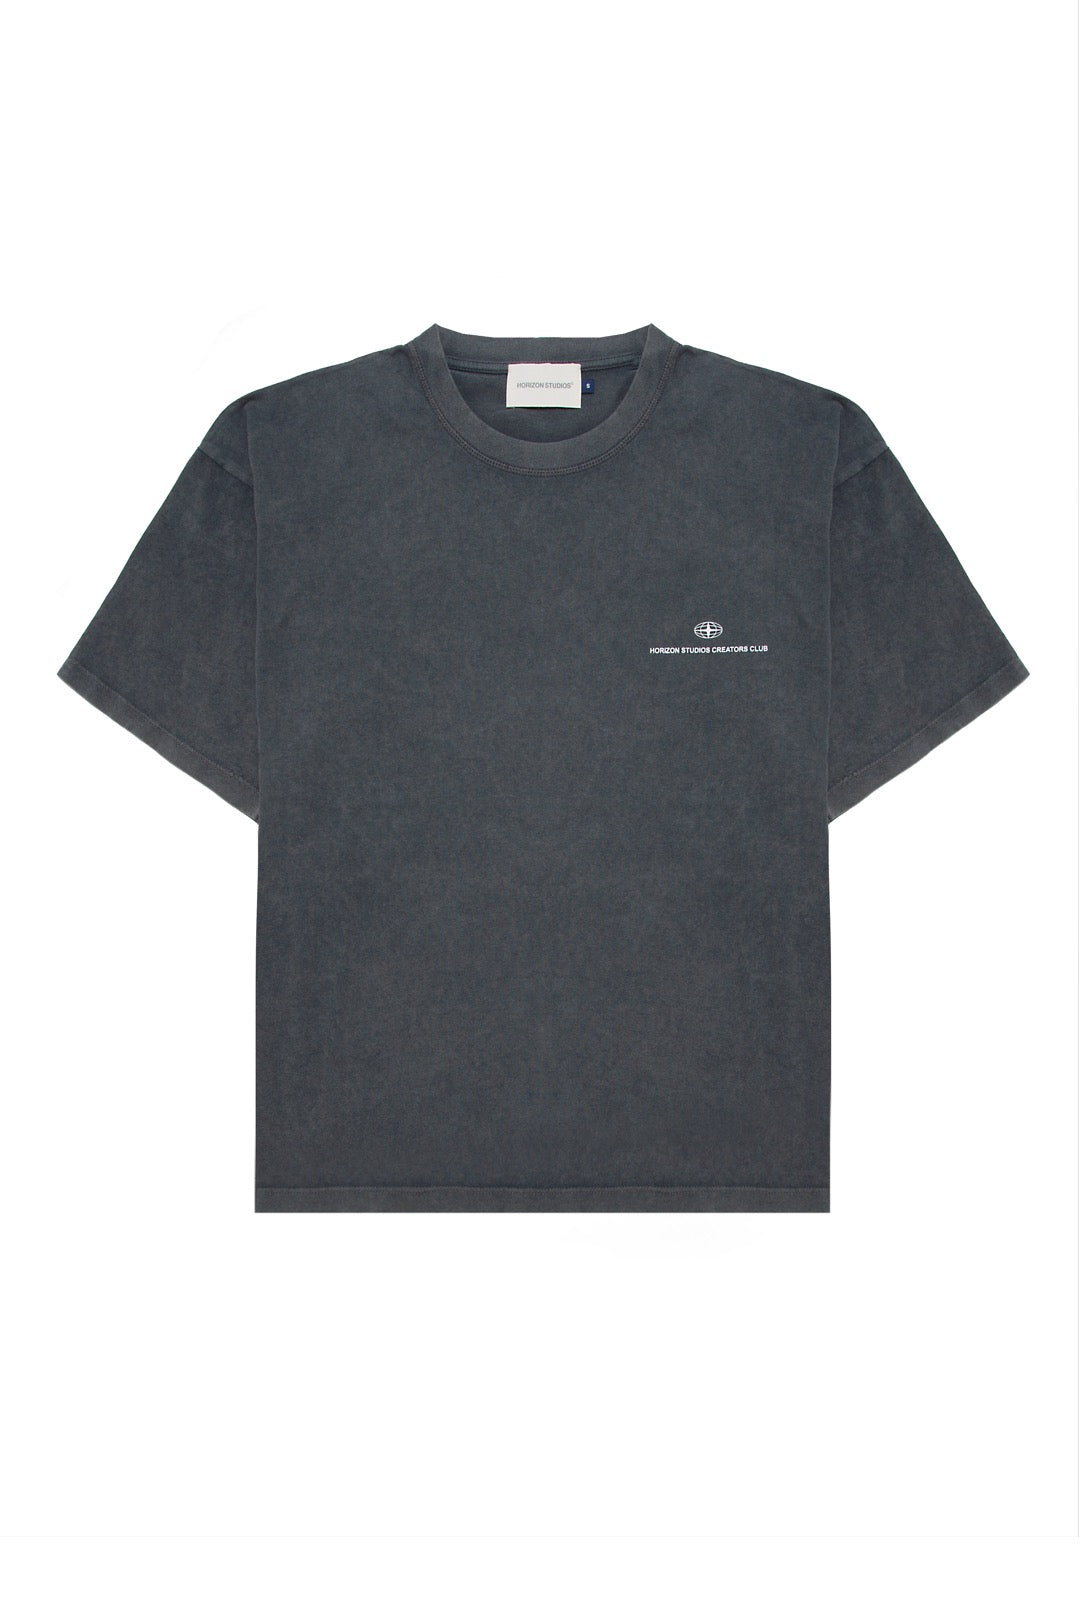 Anthracite Grey "Universal" T-Shirt